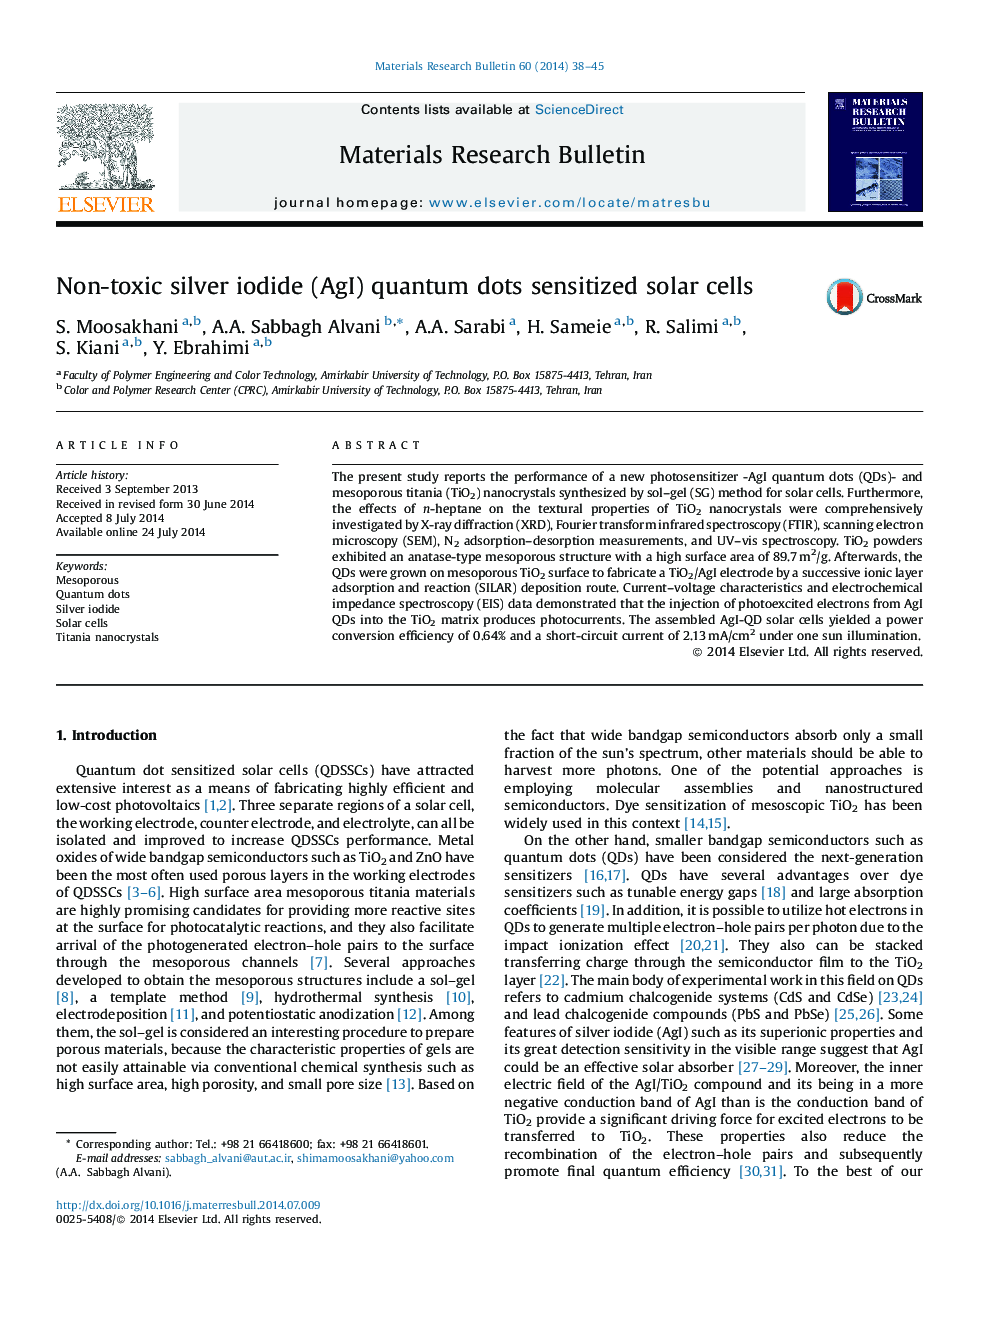 Non-toxic silver iodide (AgI) quantum dots sensitized solar cells